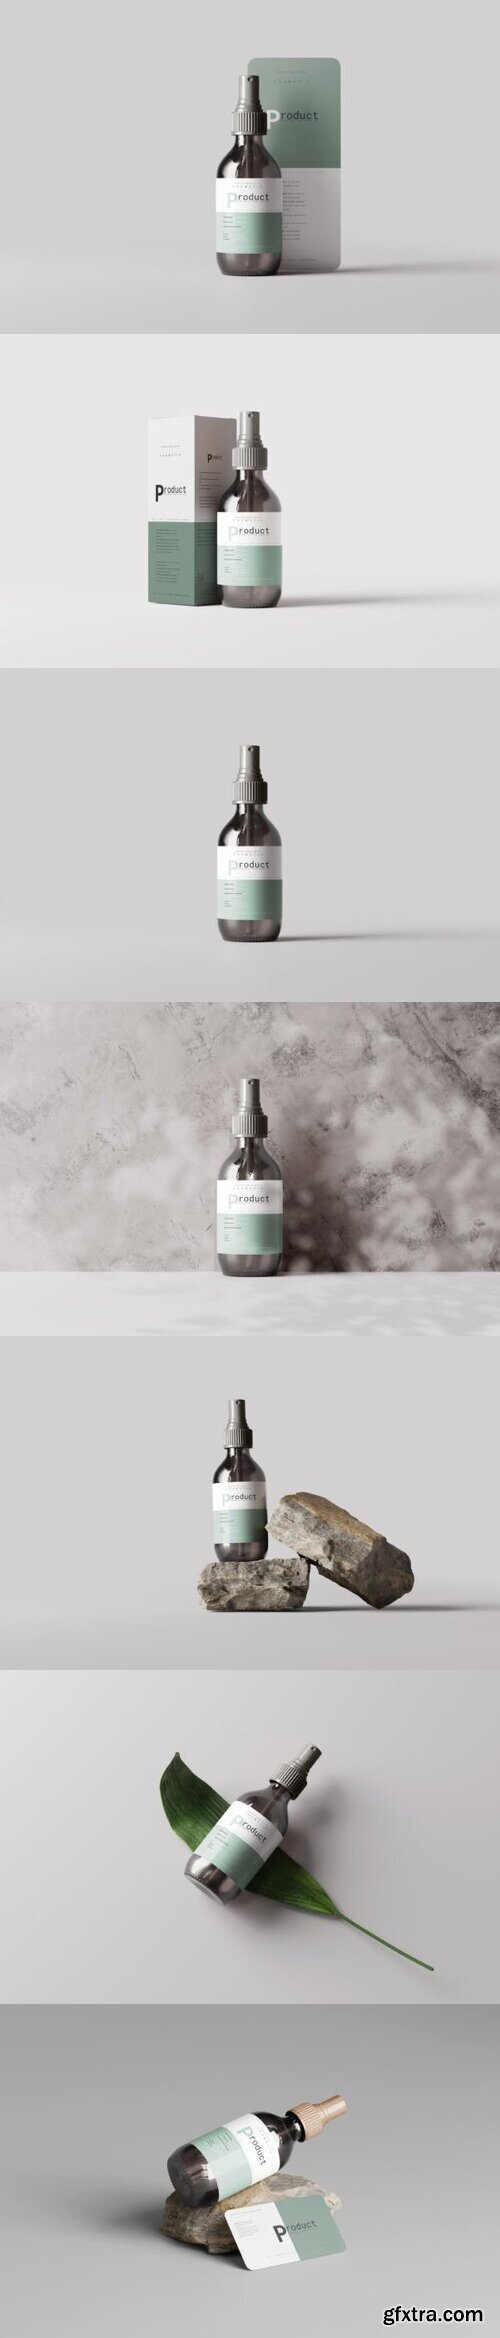 Amber Glass Spray Bottle Mockup